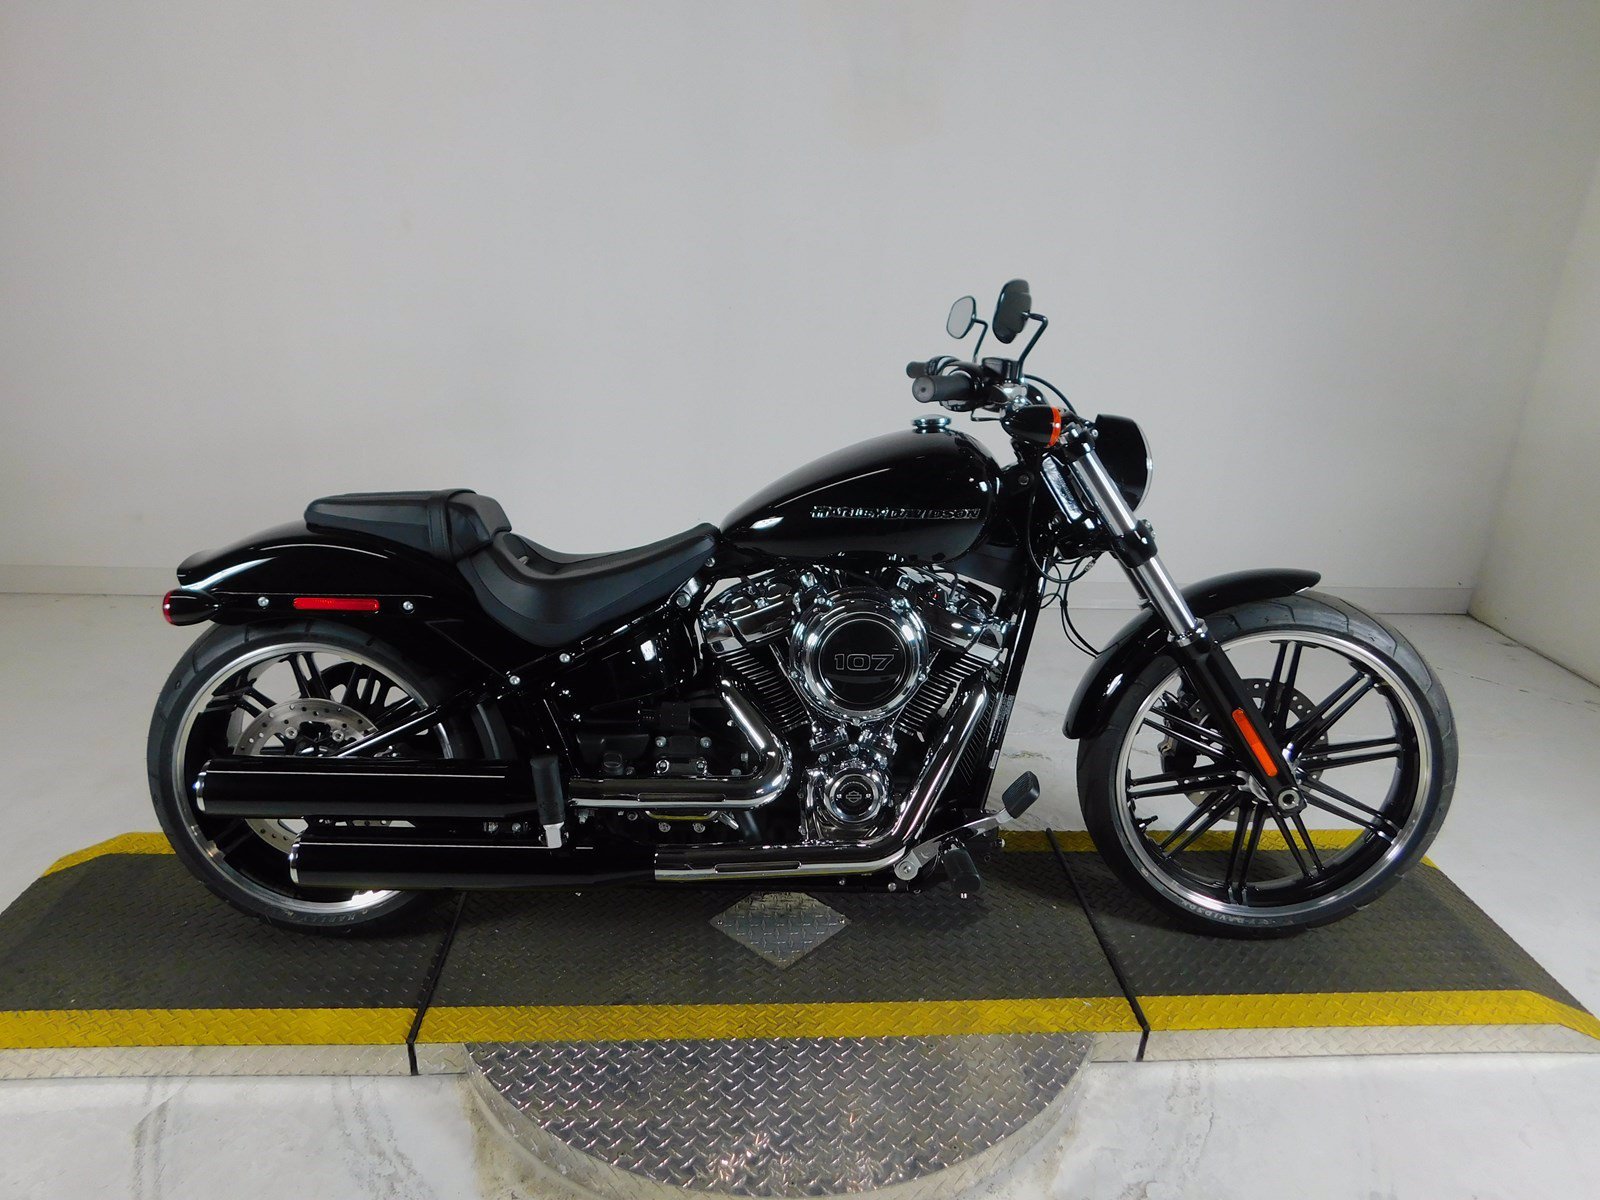 Ide Populer 37 Harley Davidson 2019 Breakout Price